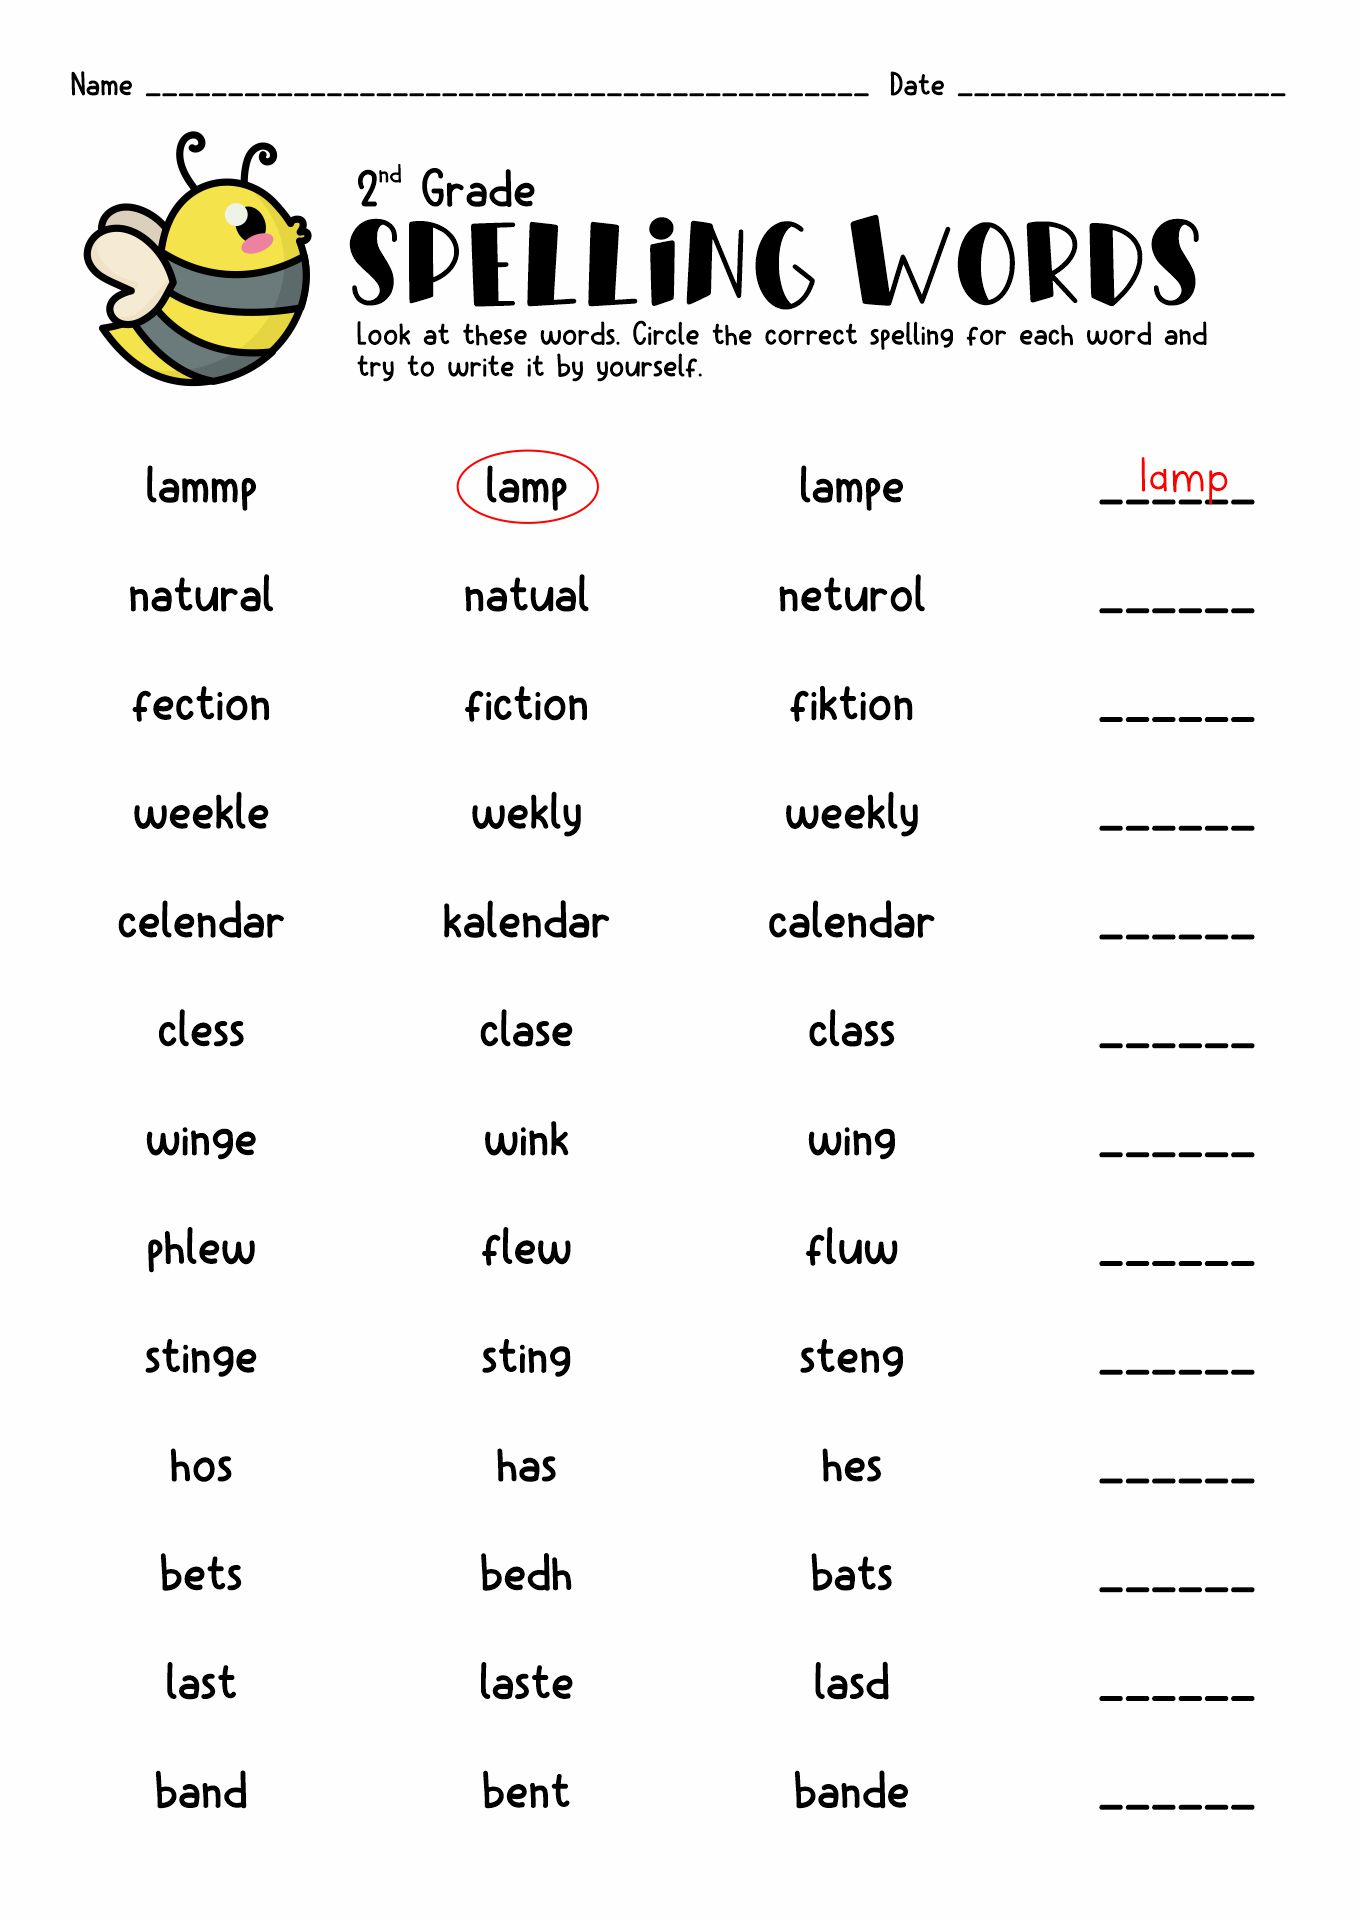 15 Best Images of Spelling Words Worksheets Grade 2 - 2 ...